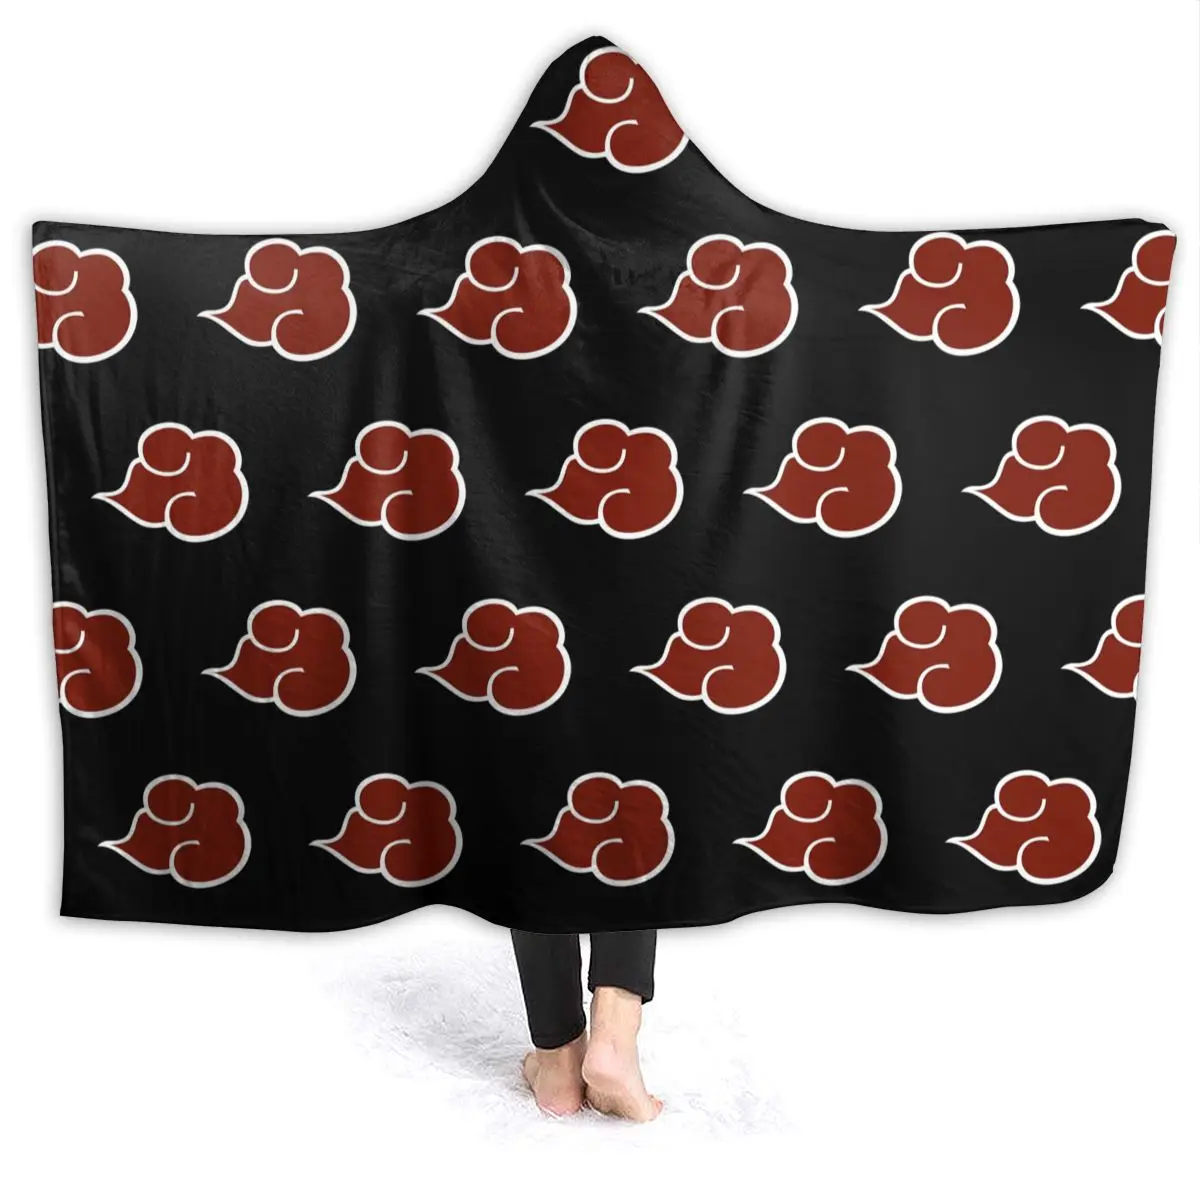 

Портативное теплое фланелевое одеяло с капюшоном Akatsuki (14), одеяло Аниме Манга, s для самолета, путешествий, покрывало